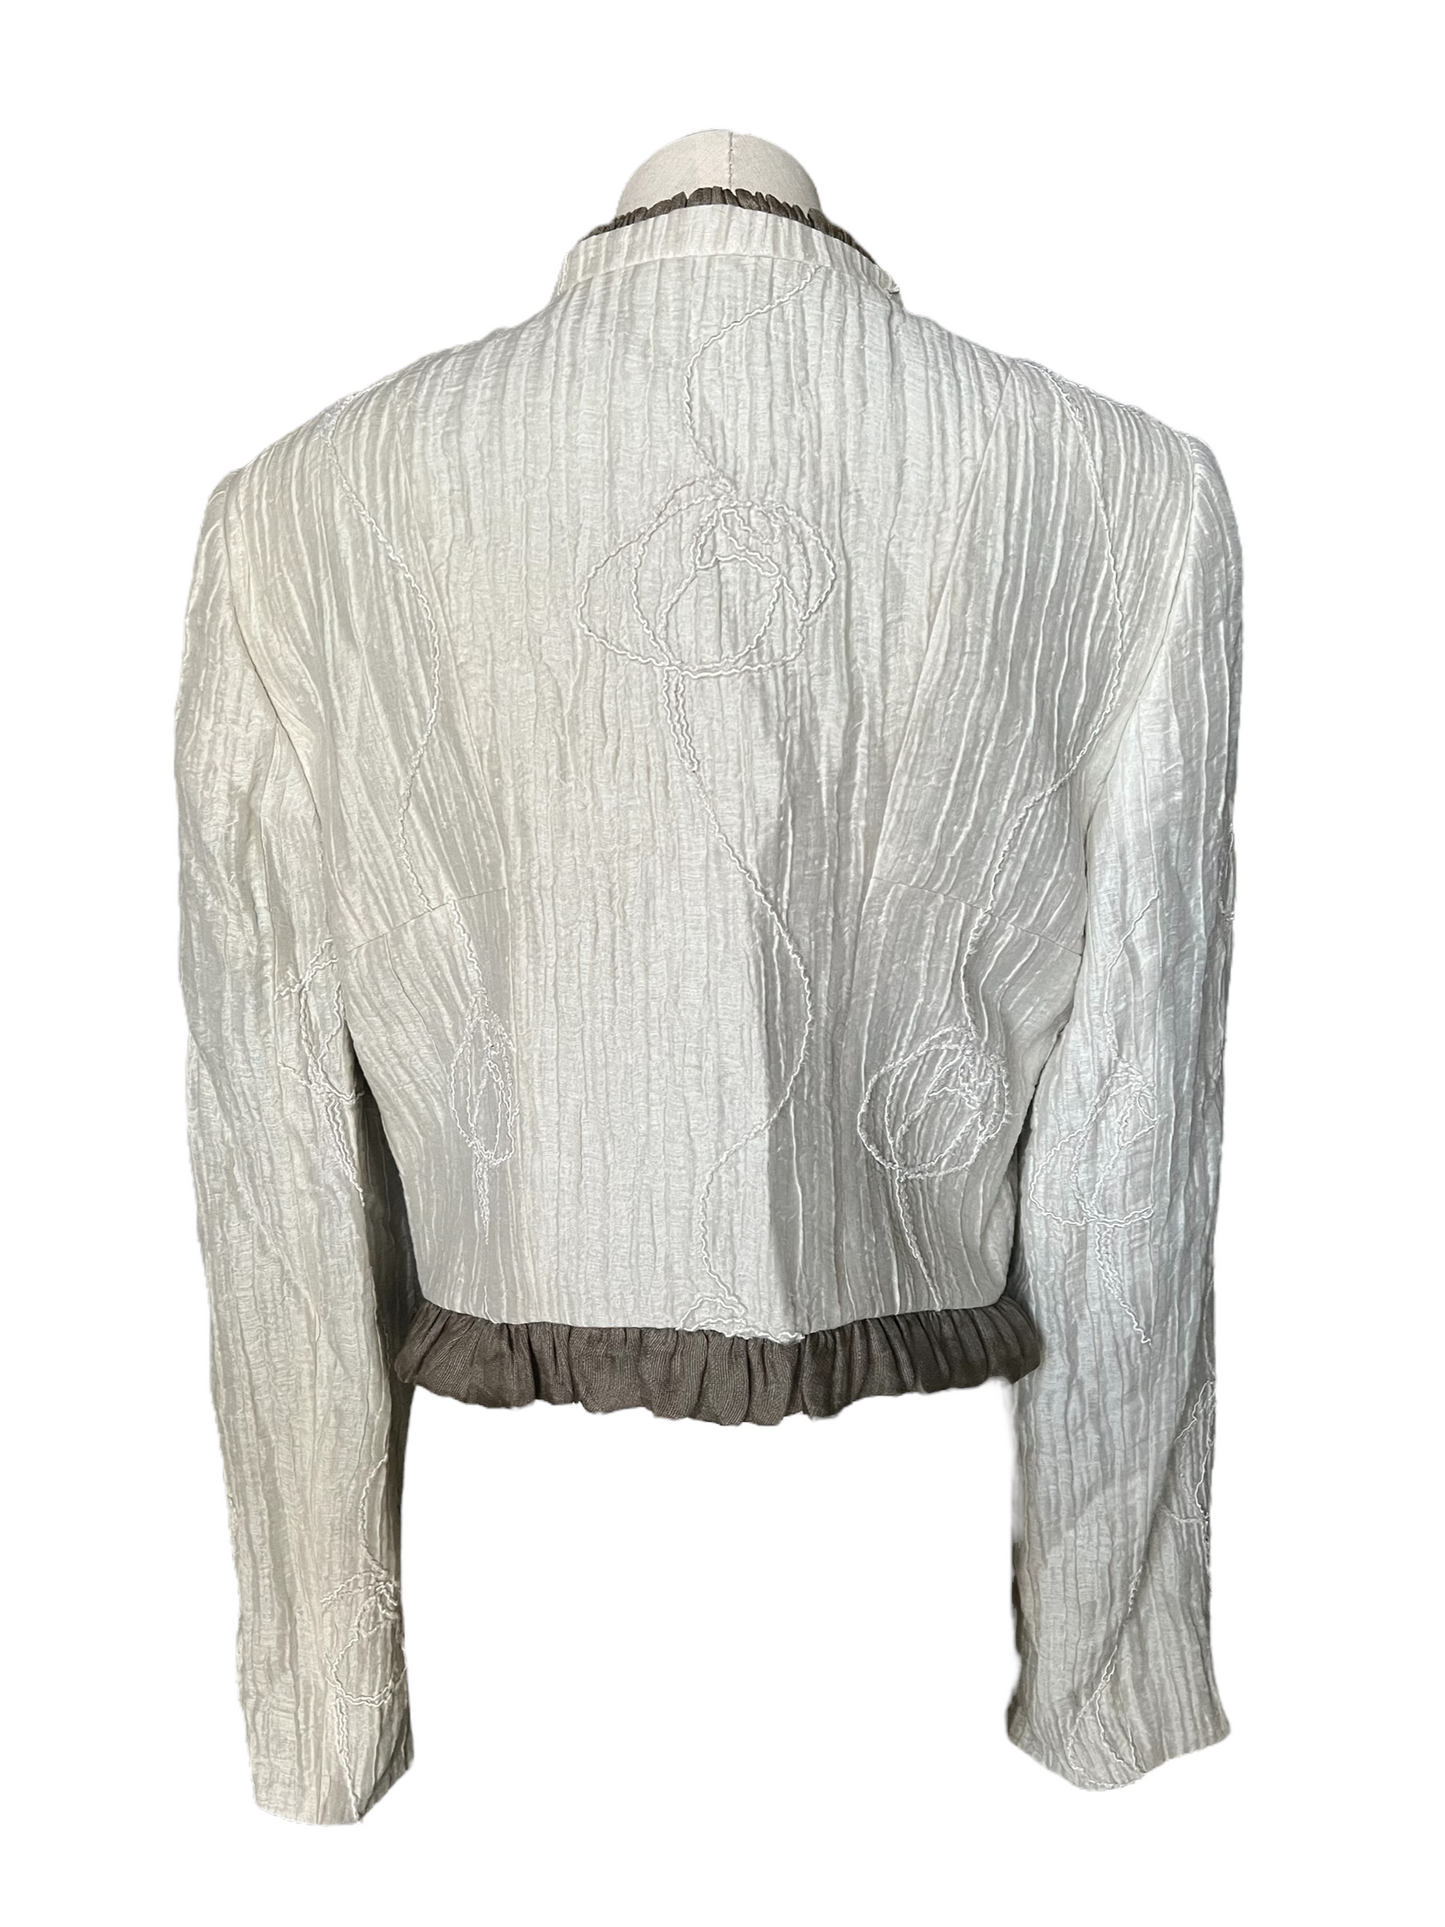 Giorgio Armani Beige Textured Size 48 Jacket